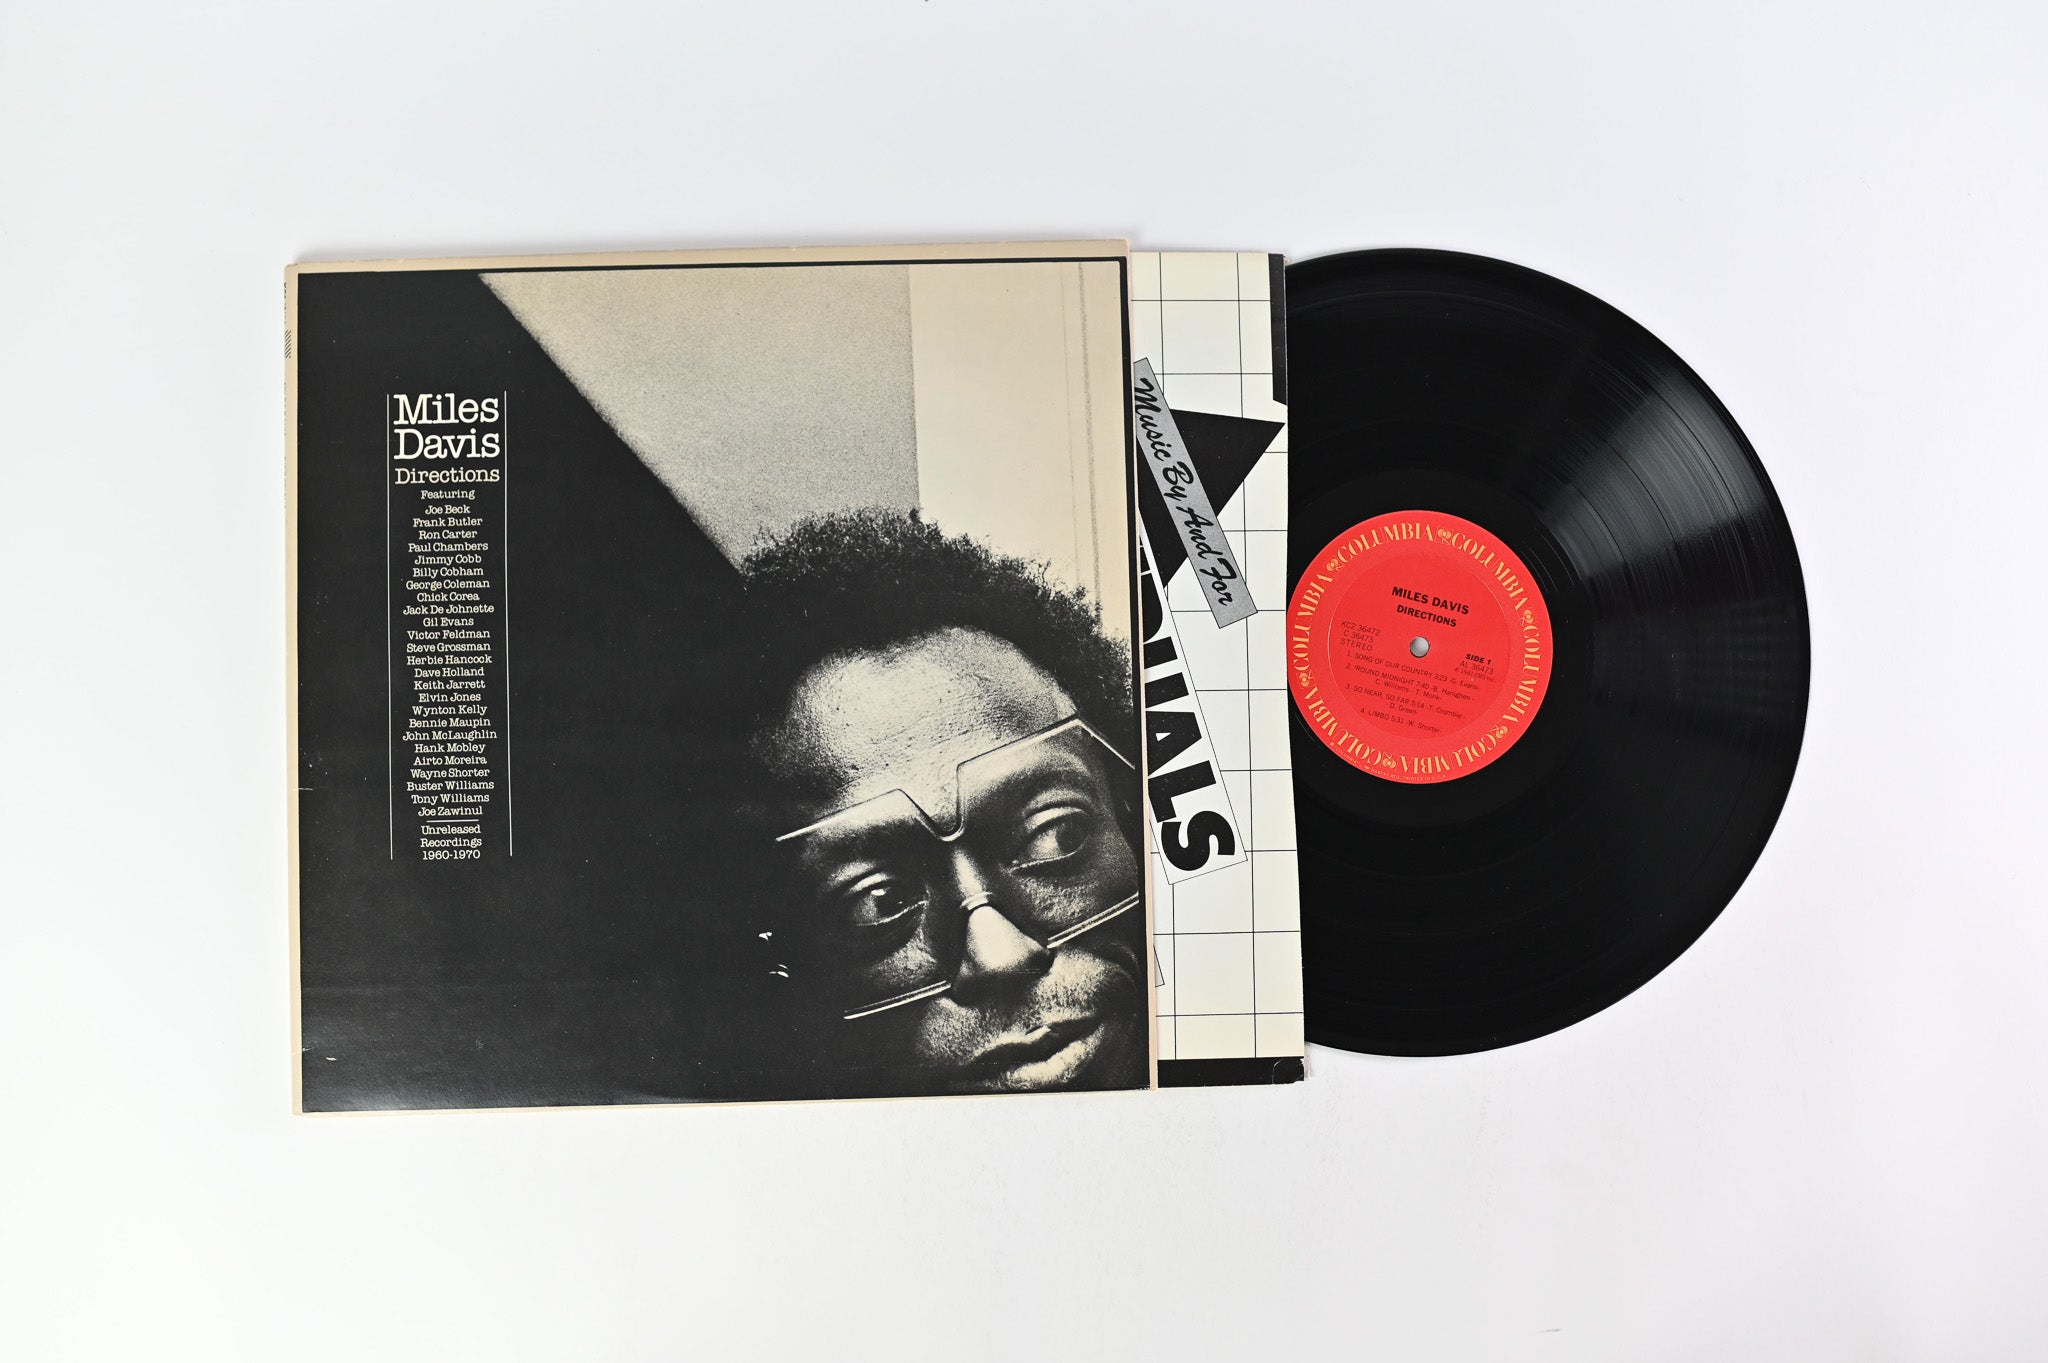 Miles Davis - Directions on Columbia